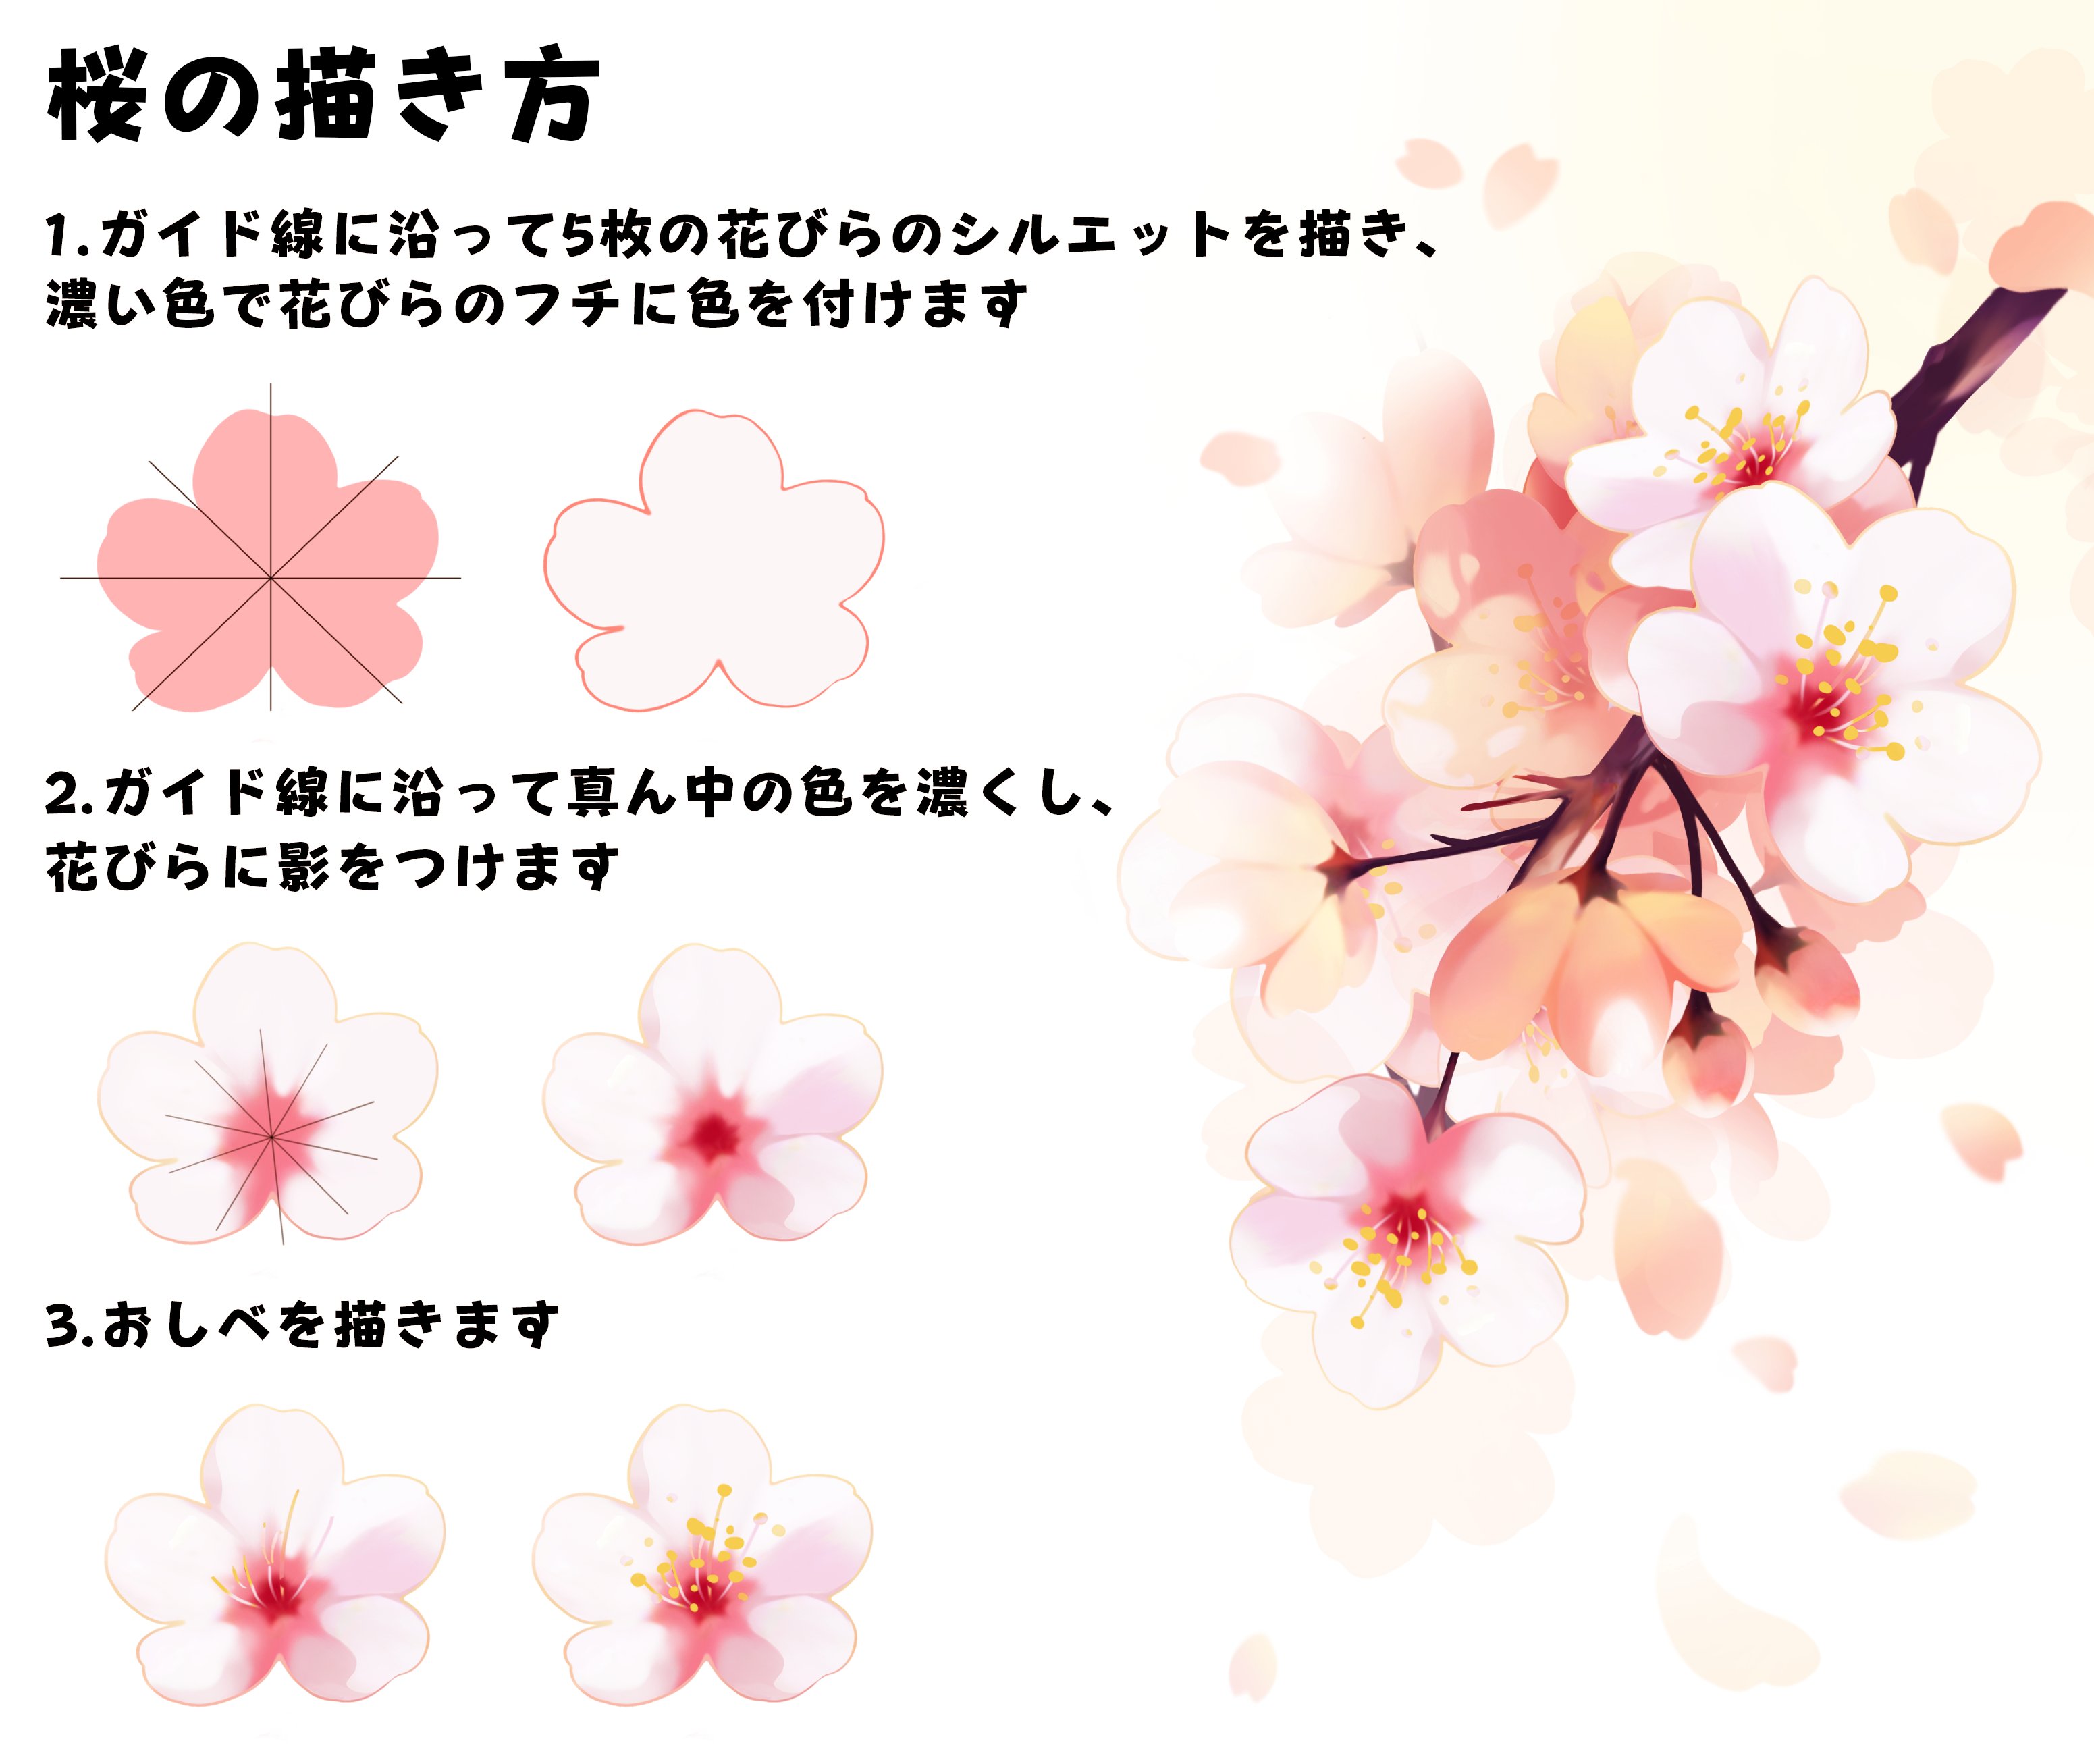 توییتر 紅豆井 در توییتر 桜の描き方 3月日は春分の日です W T Co Jhrg0ggltp 桜の花 春分の日 描き方 絵描きさんと繋がりたい イラスト好きな人と繋がりたい T Co Mvudinduz9